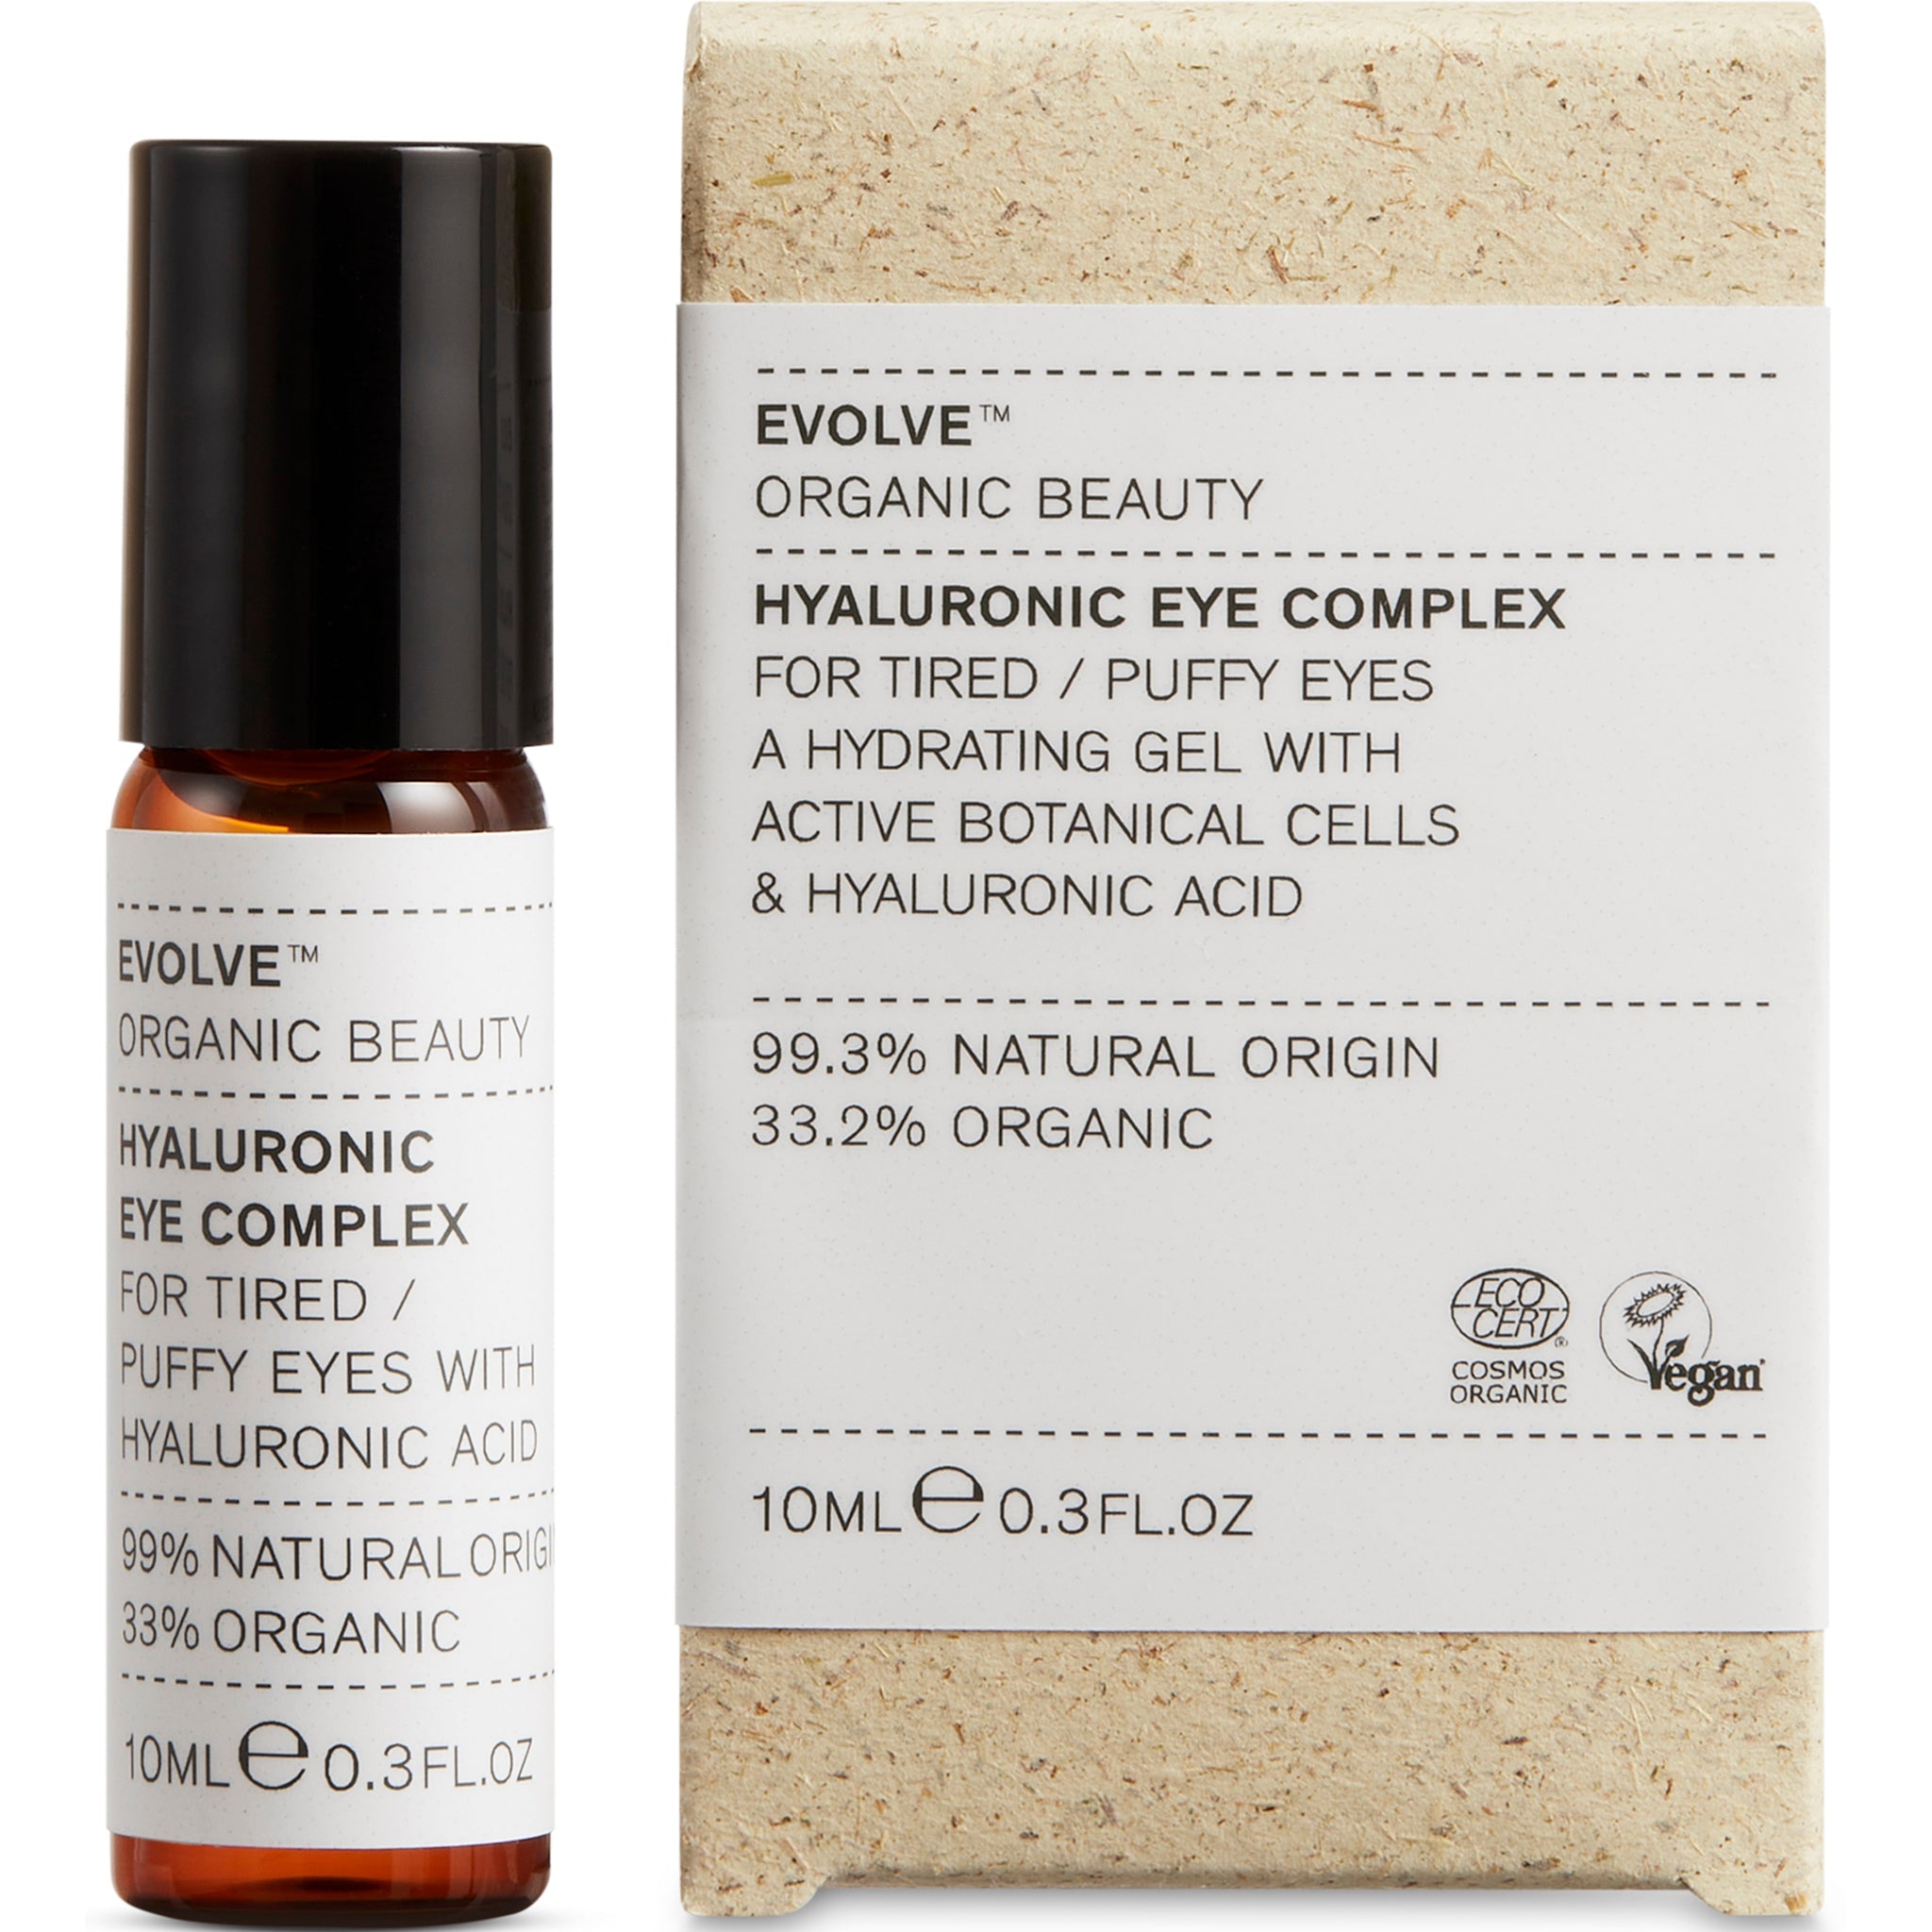 Hyaluronic Eye Complex - mypure.co.uk